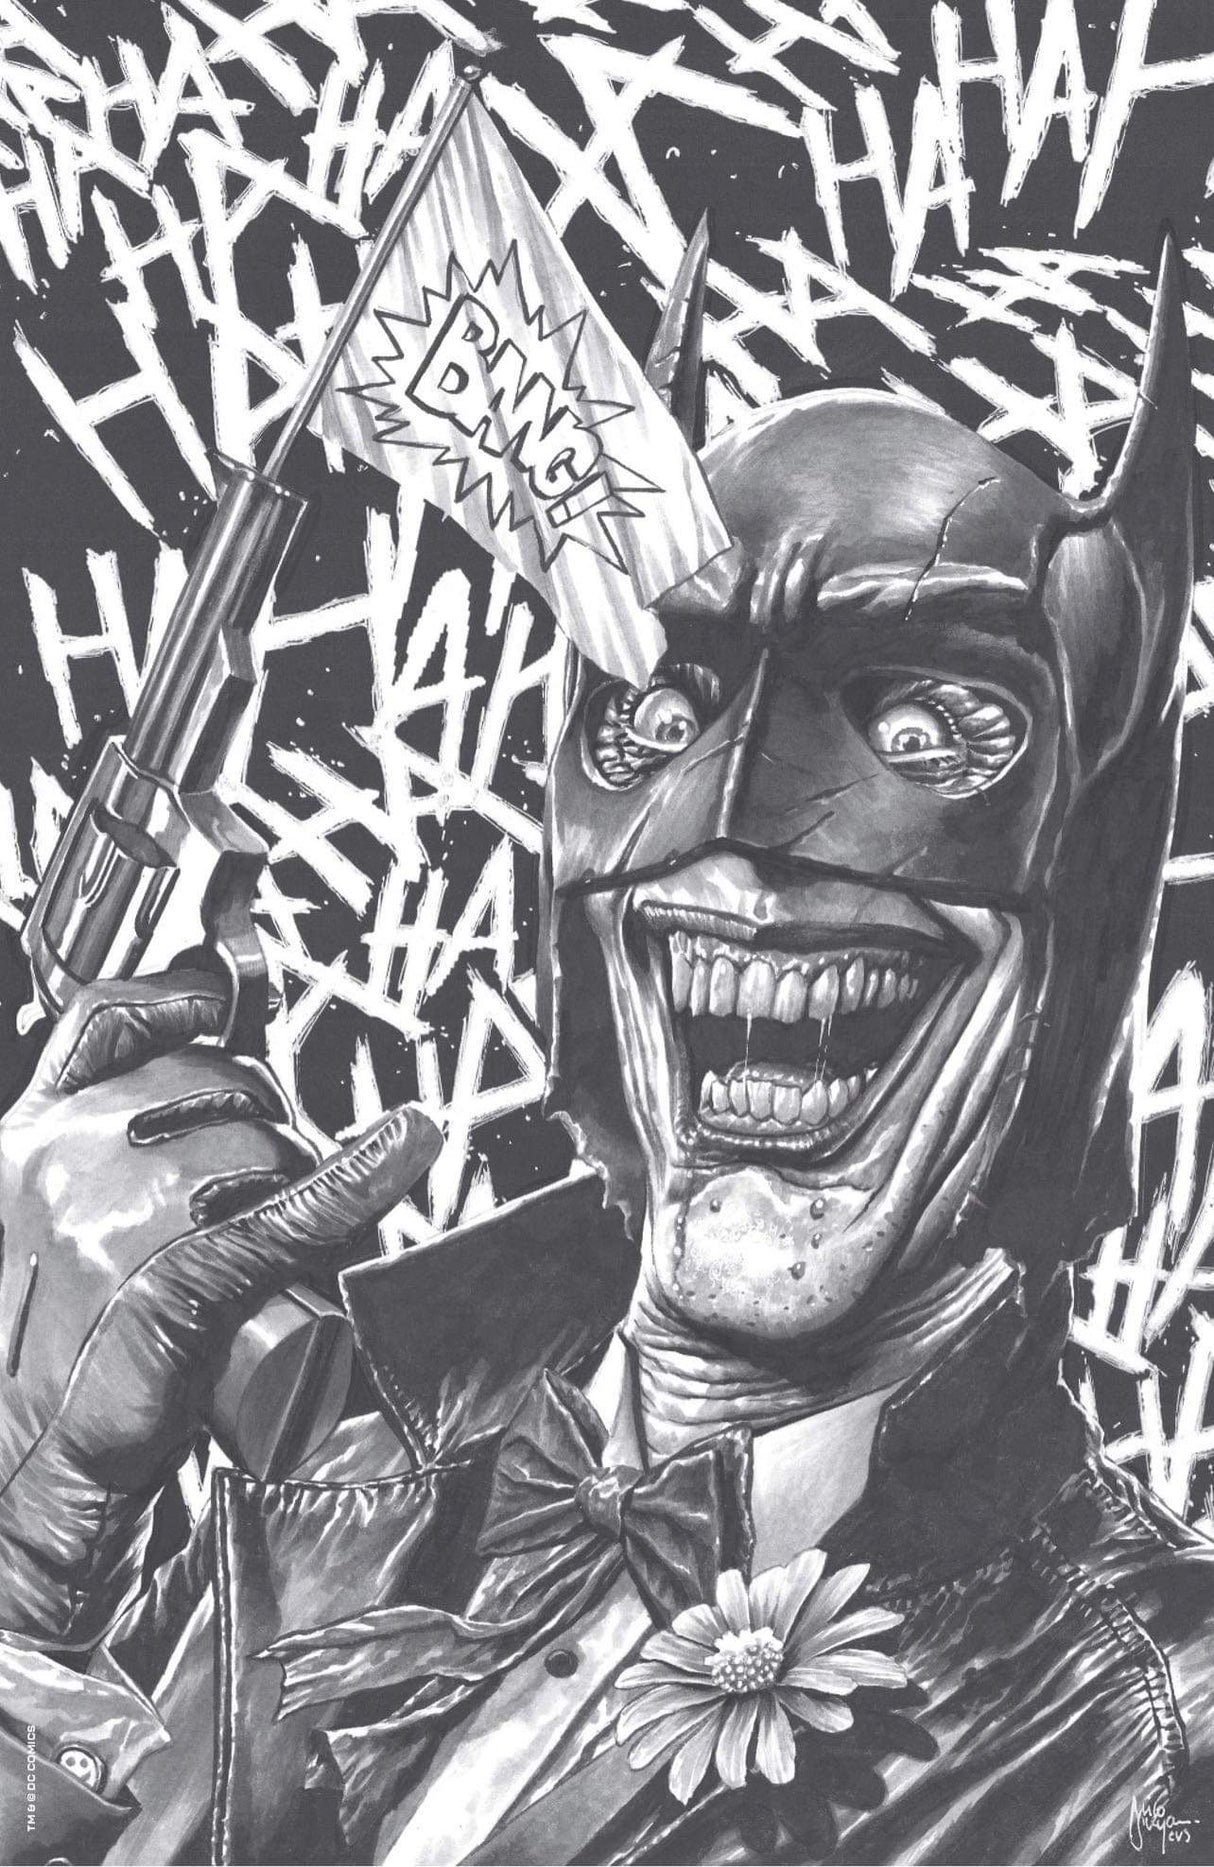 BATMAN & THE JOKER THE DEADLY DUO #1 - MICO SUYAN SKETCH VIRGIN LTD 1000 - 11/1/22